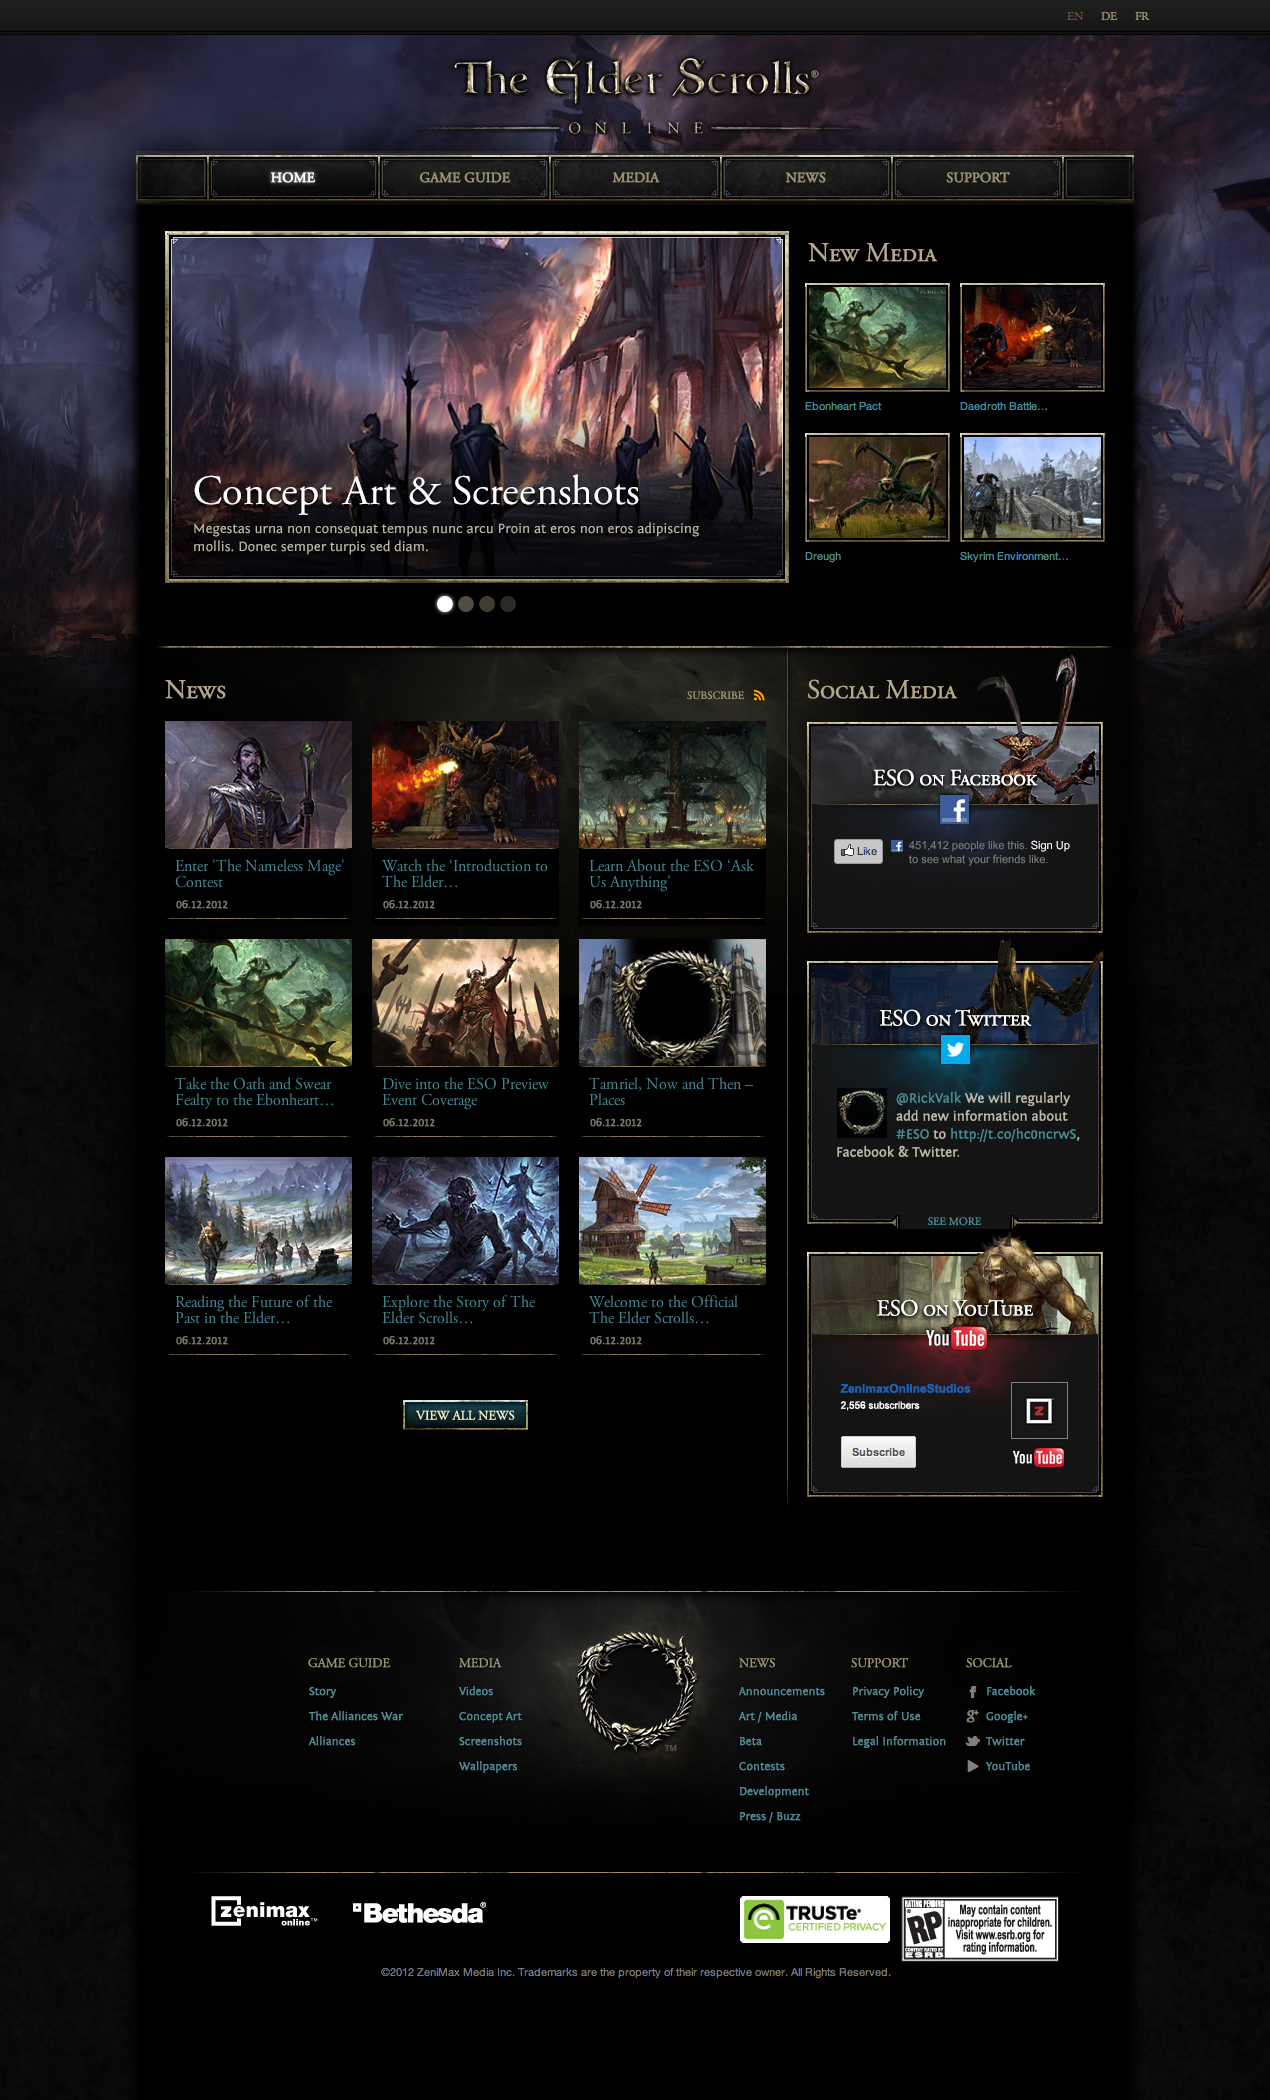 The Elder Scrolls Online Launch Website and Beta Sign Up — FRANK CADIC